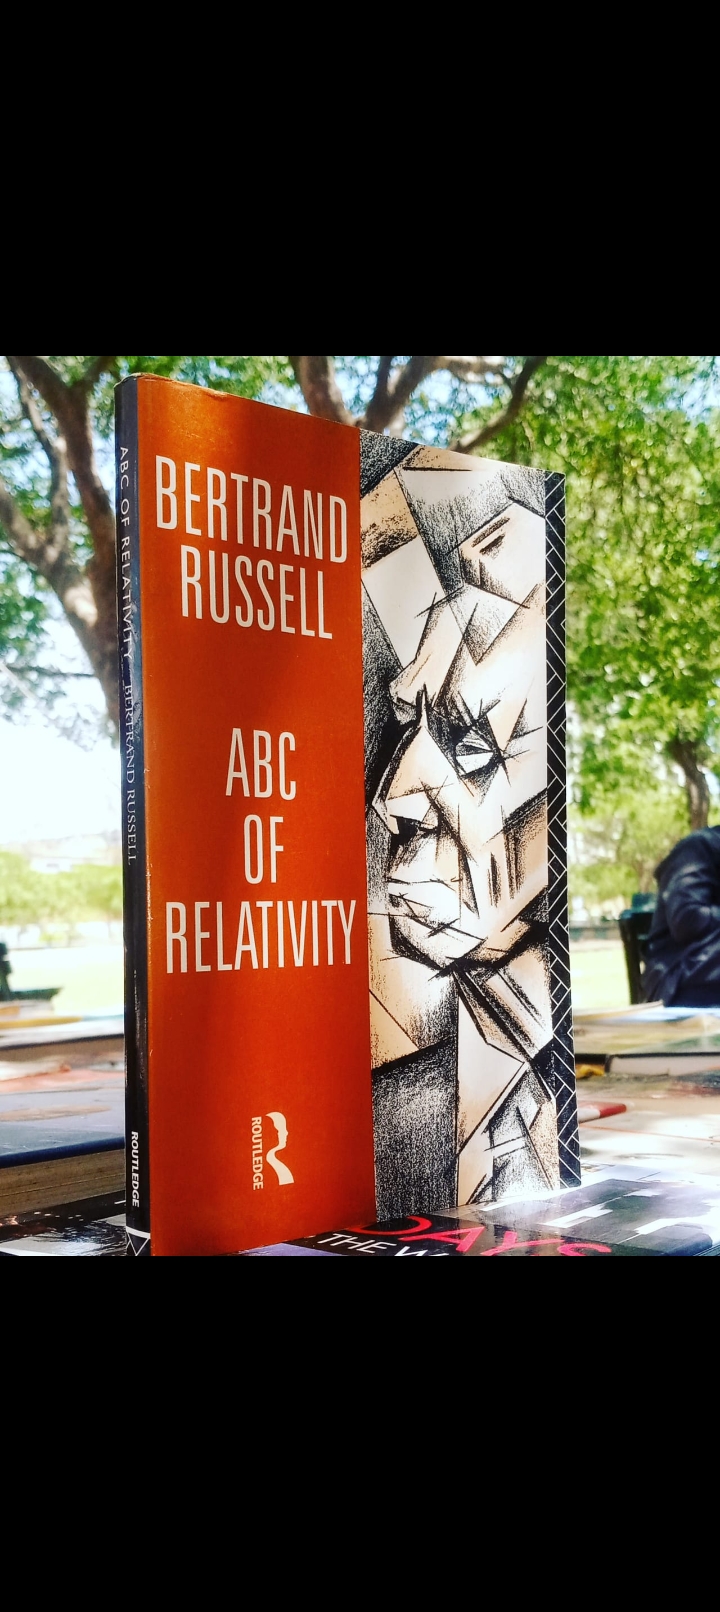 abc of relativity by bertrand russell. original paperback